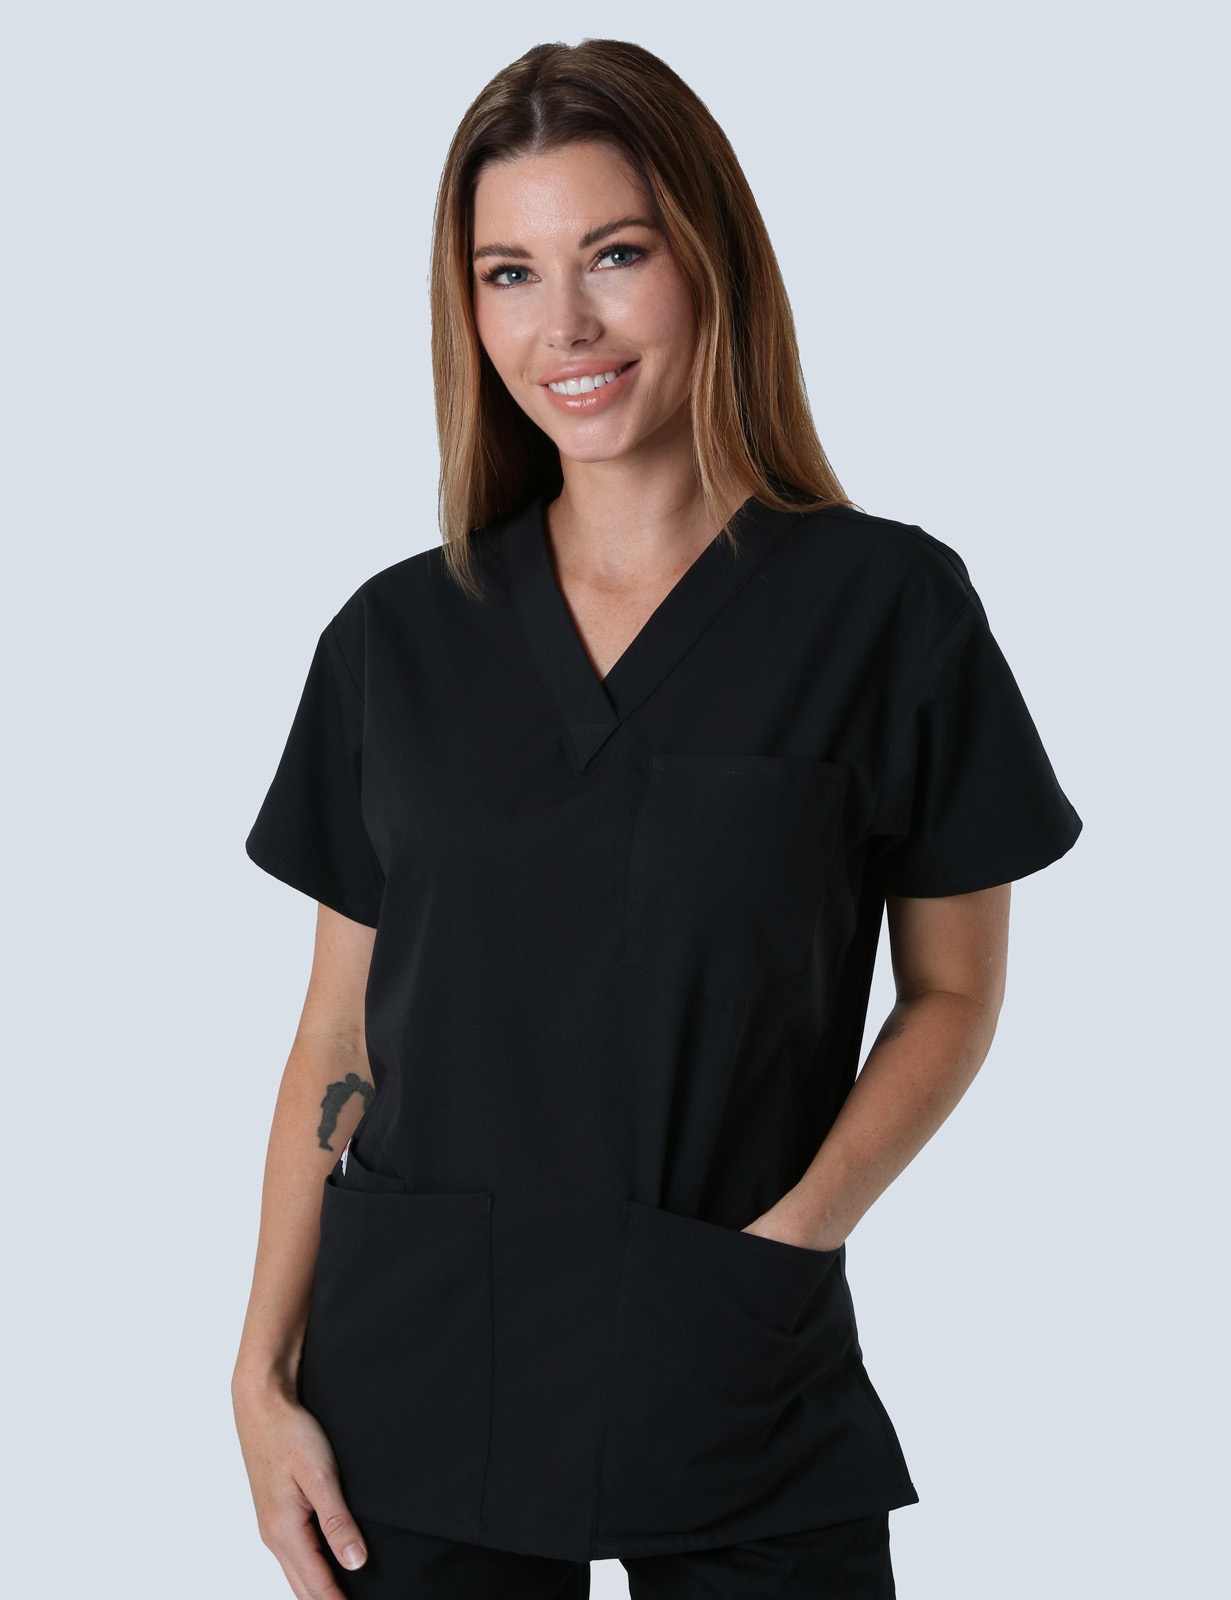 Logan Hospital - MI Assistant (4 Pocket Scrub Top in Black incl Logos)